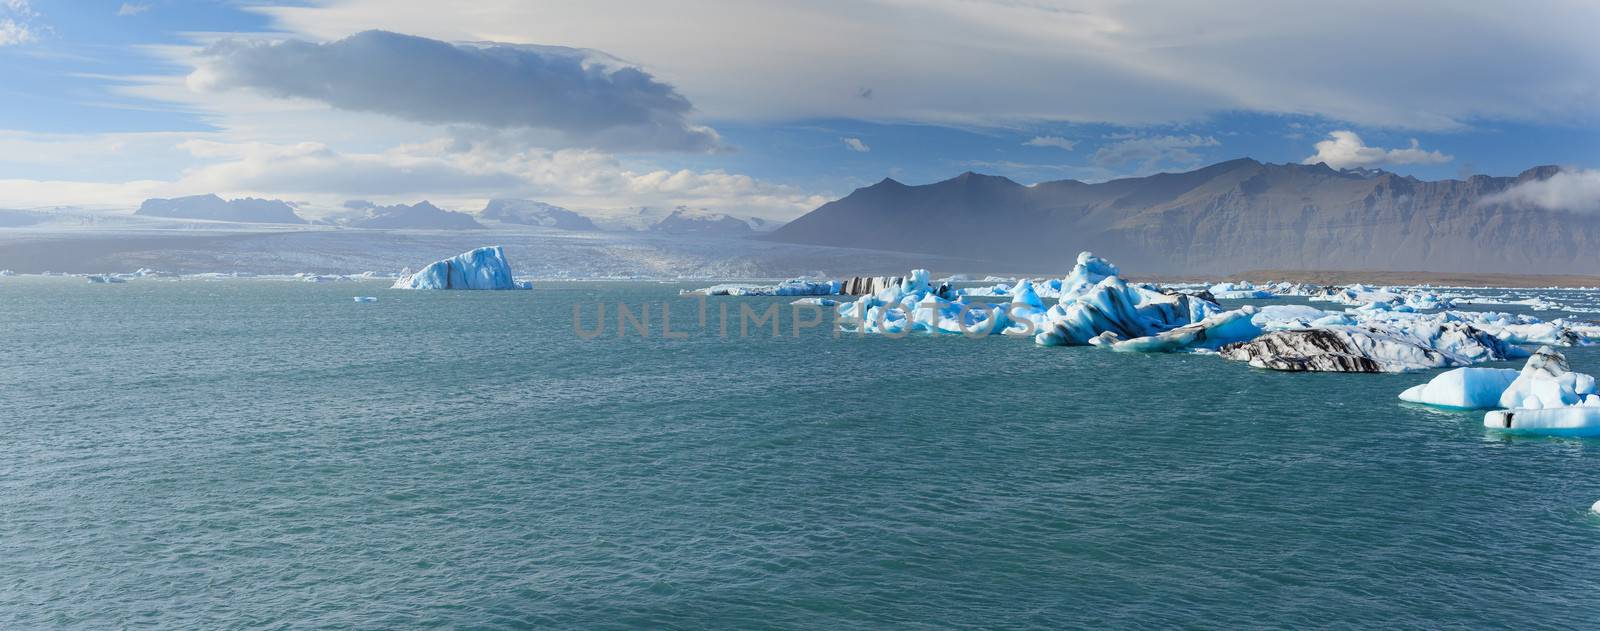 Glacier lagoon in east iceland by maxoliki